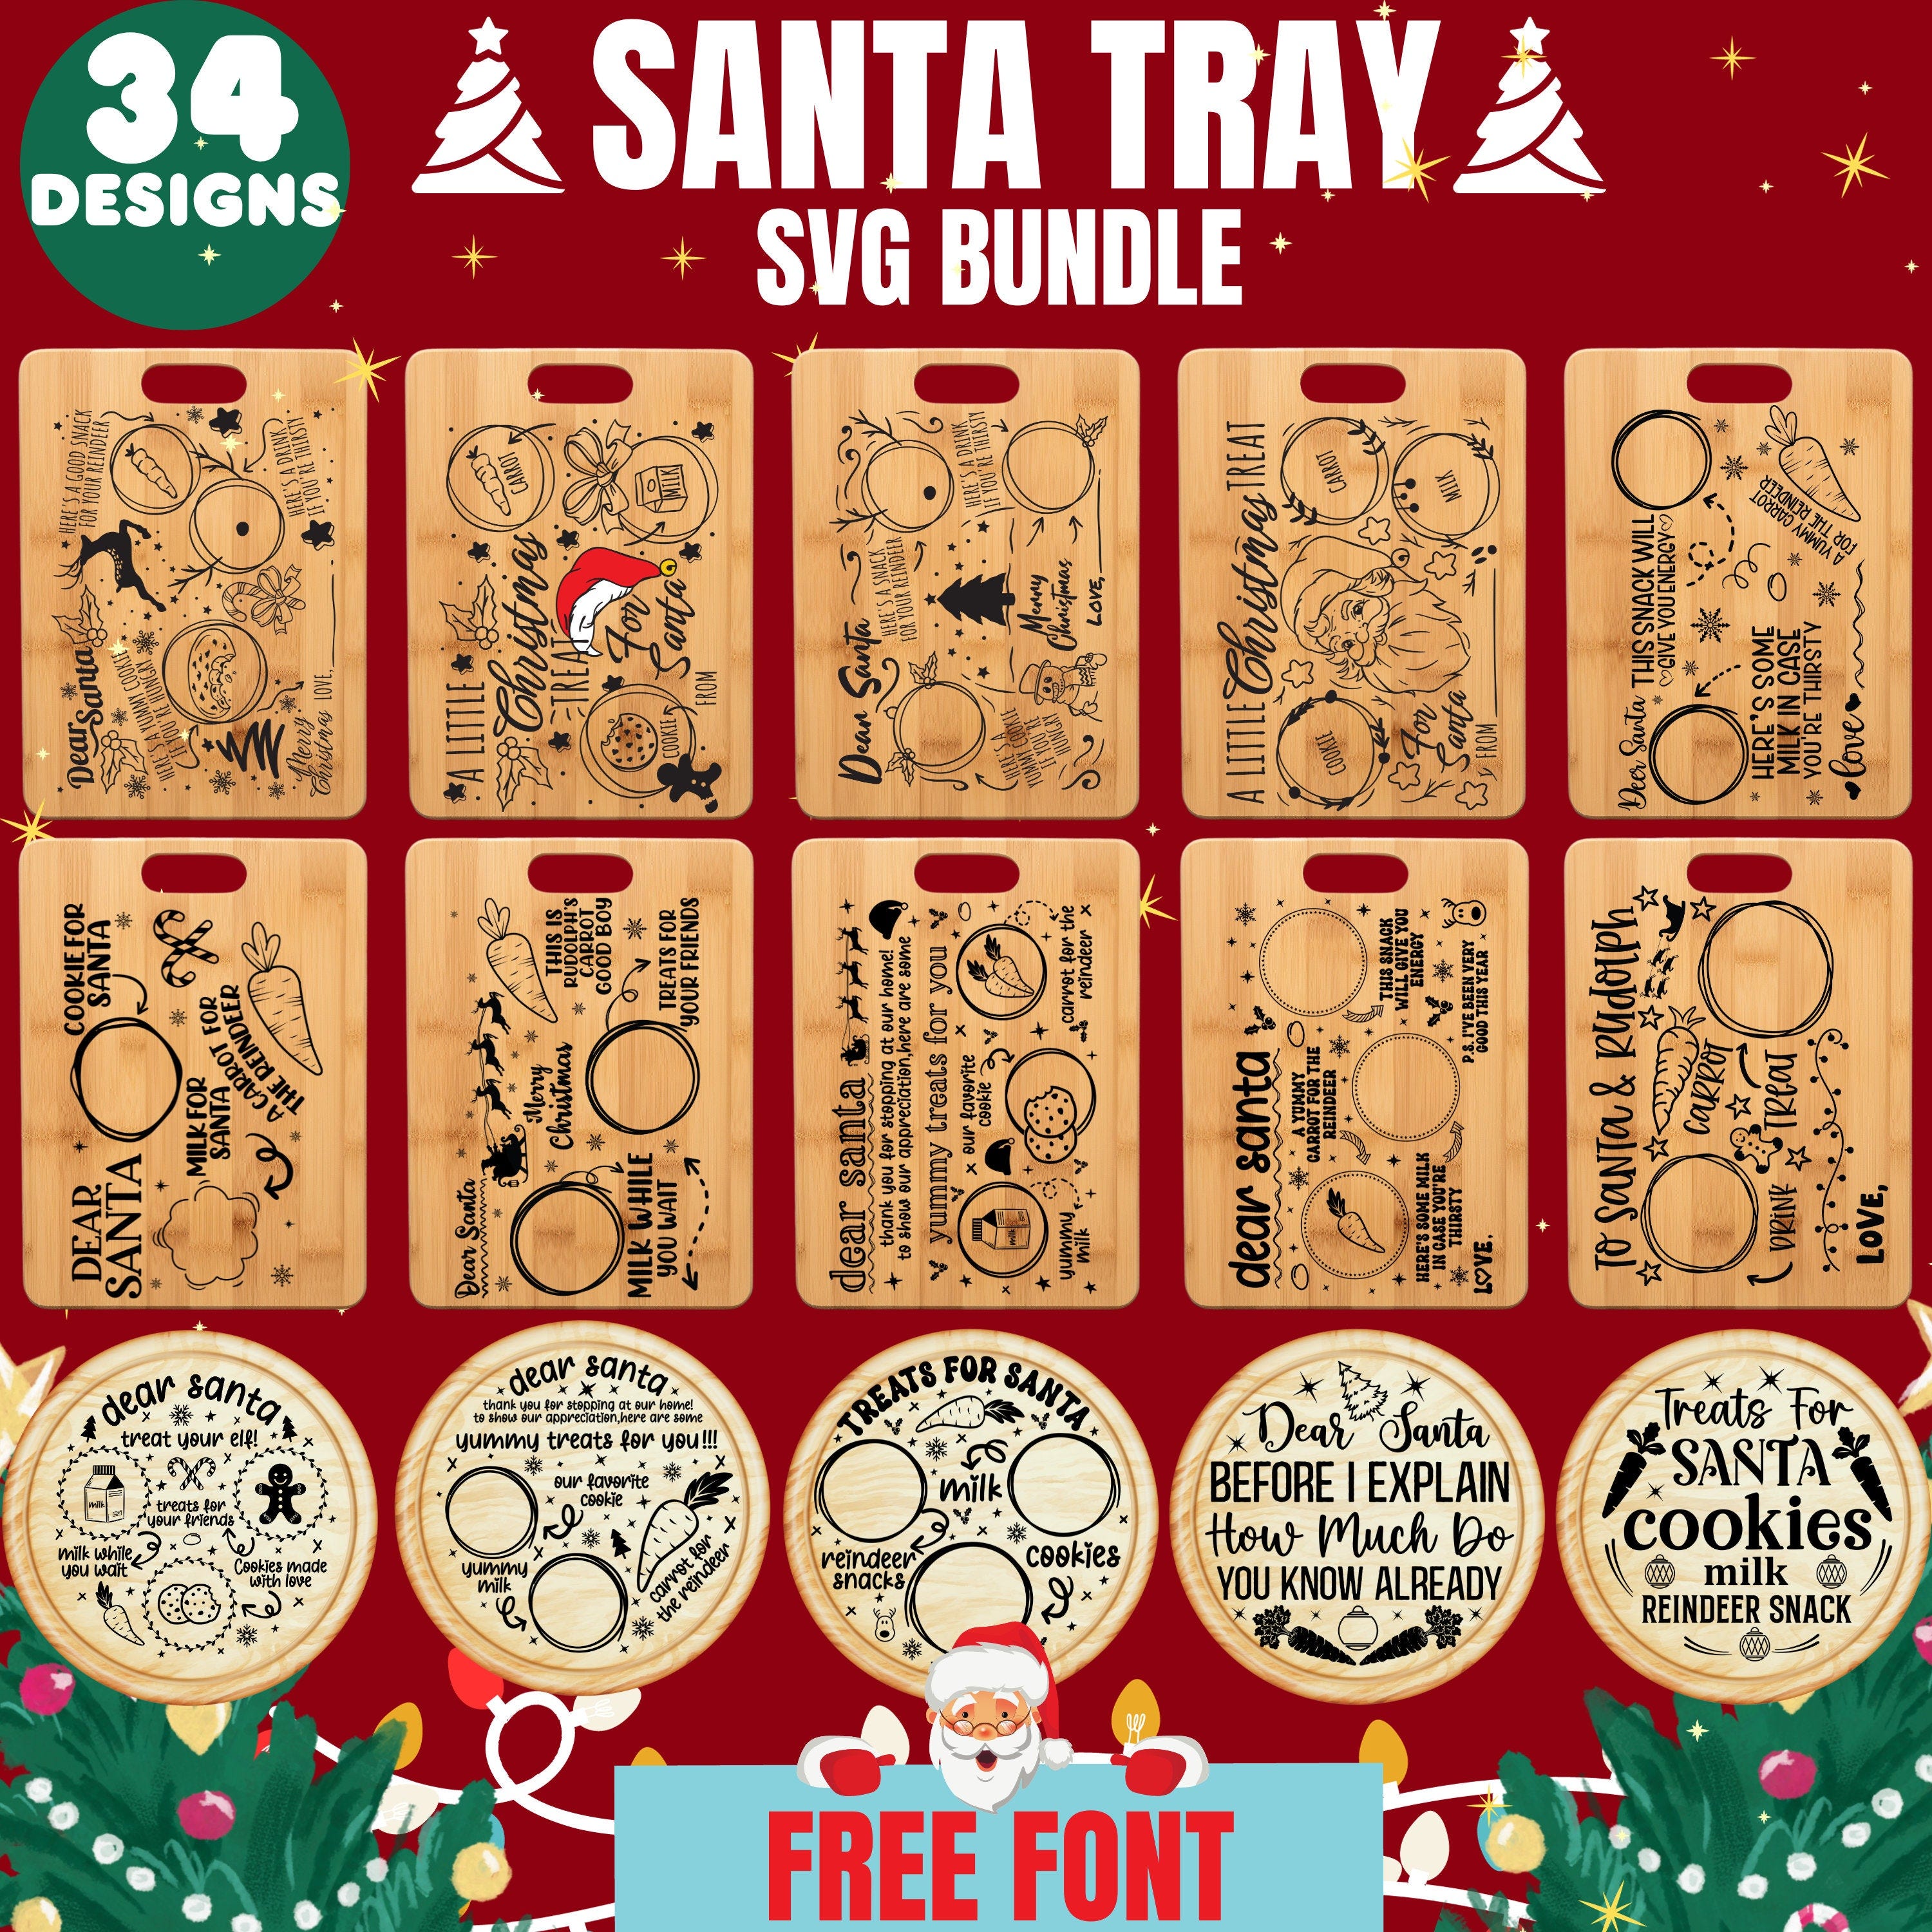 Dear Santa Tray SVG PNG 34 Bundle, Christmas SVG, Santa Tray Santa Plate svg, Santa Milk Cookies svg, Cookies for Santa svg, carrot svg